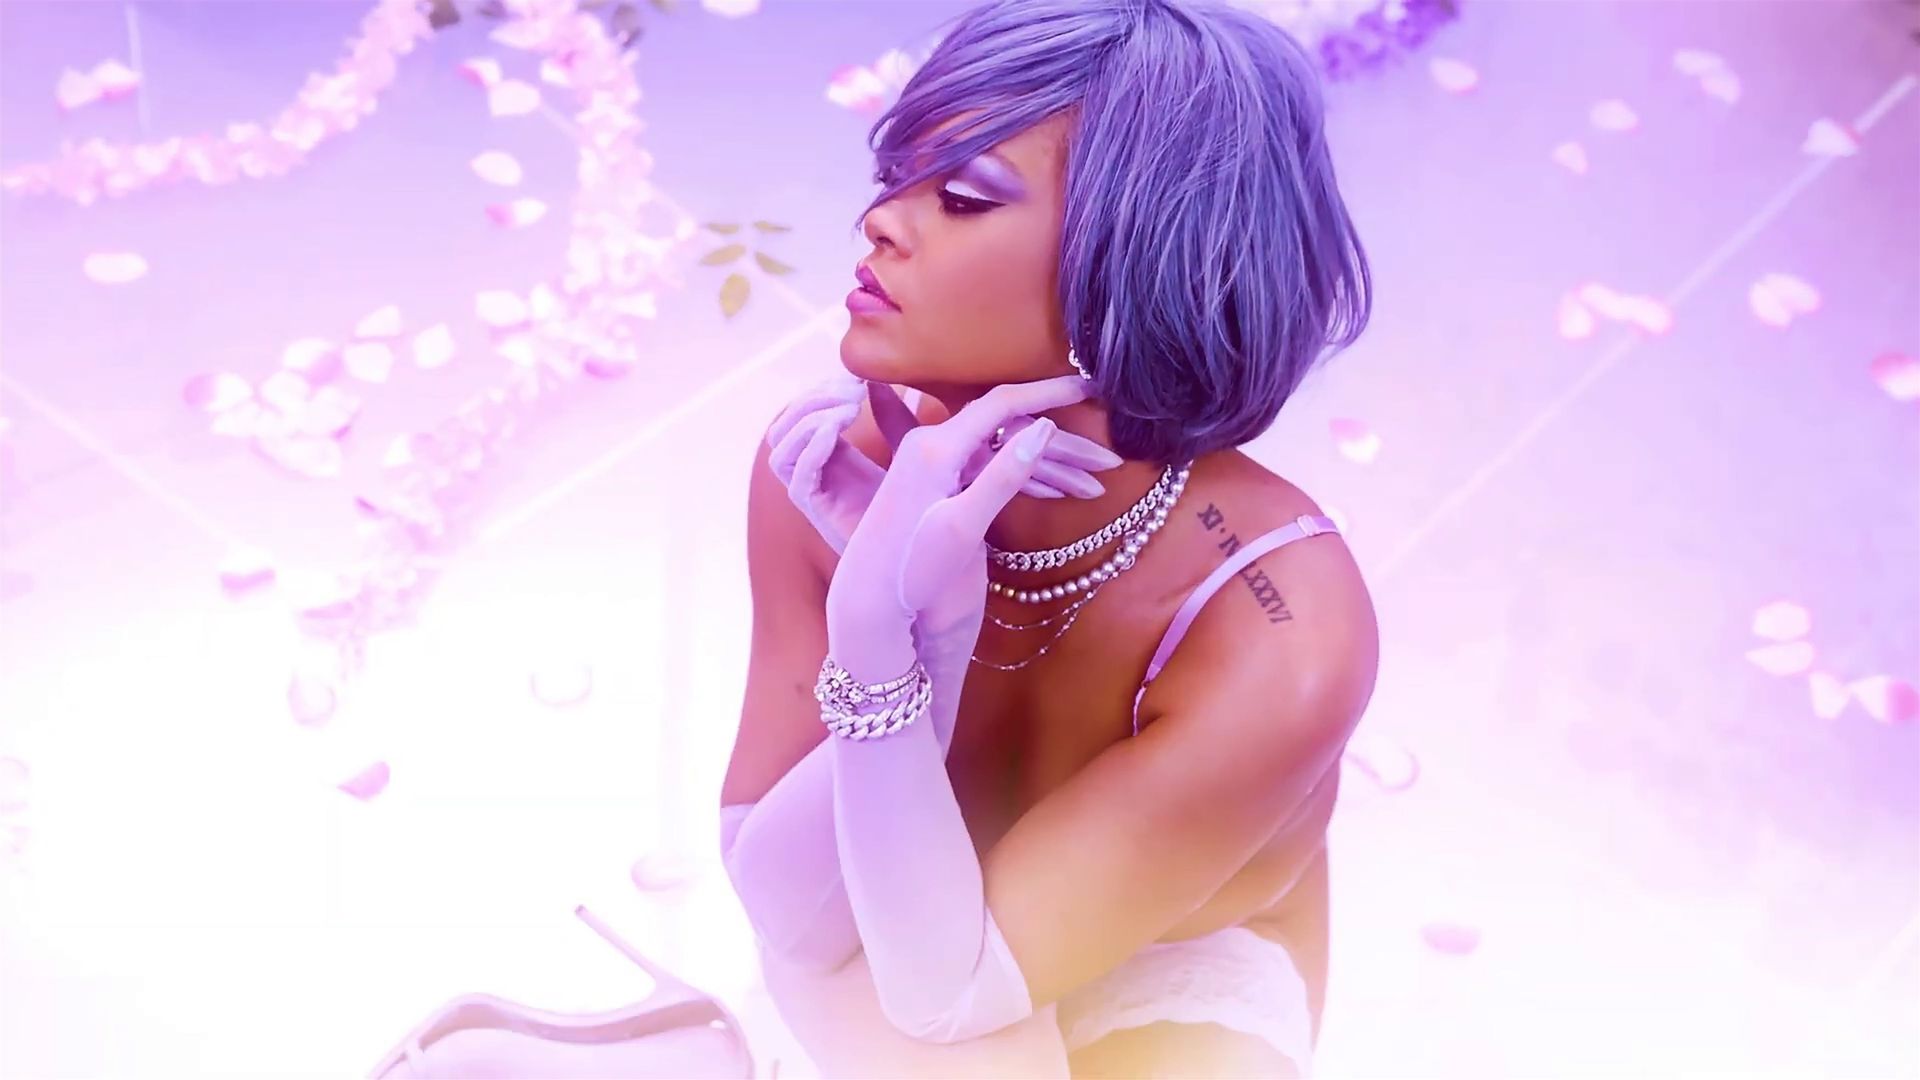 Photos n°2 : Rihanna’s New Song for Wakanda Forever!